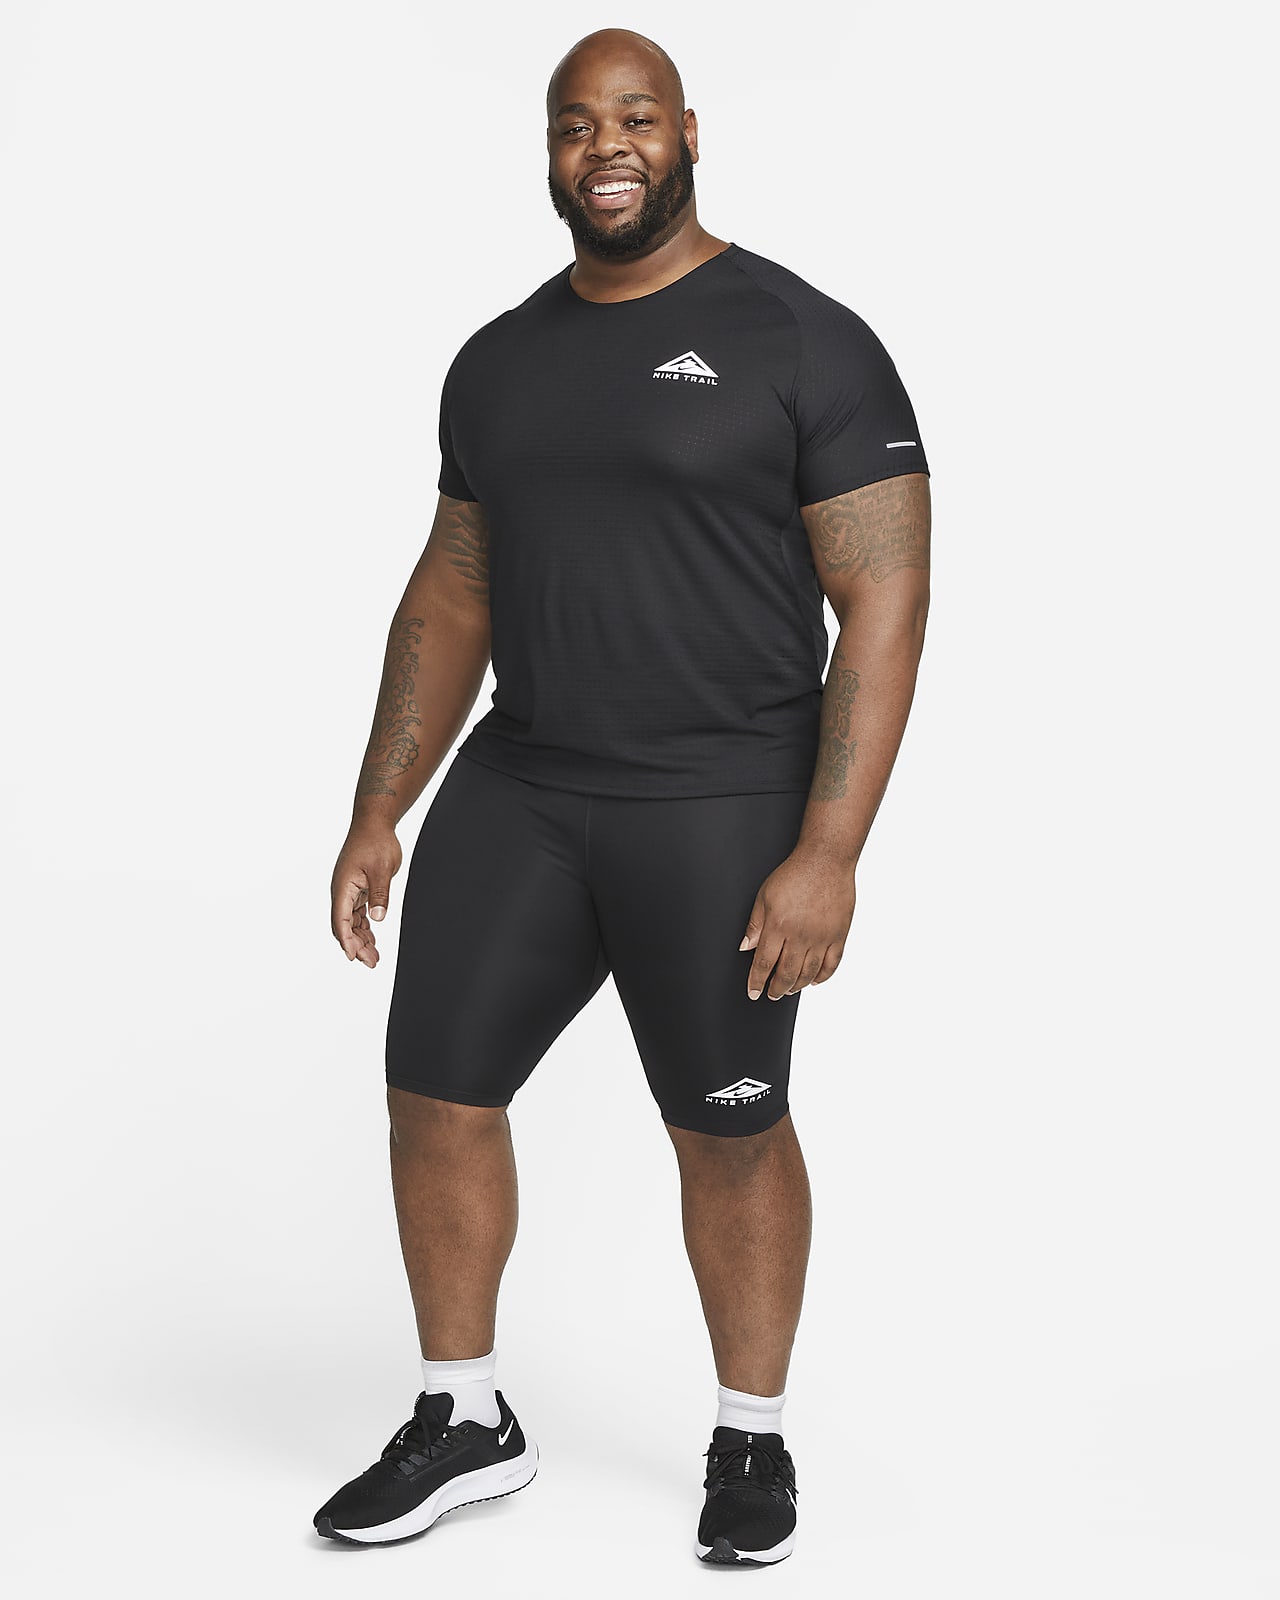 Men's Small Nike Pro Hypercool compression 1/2 sleeve Football Shirt Dri  Fit